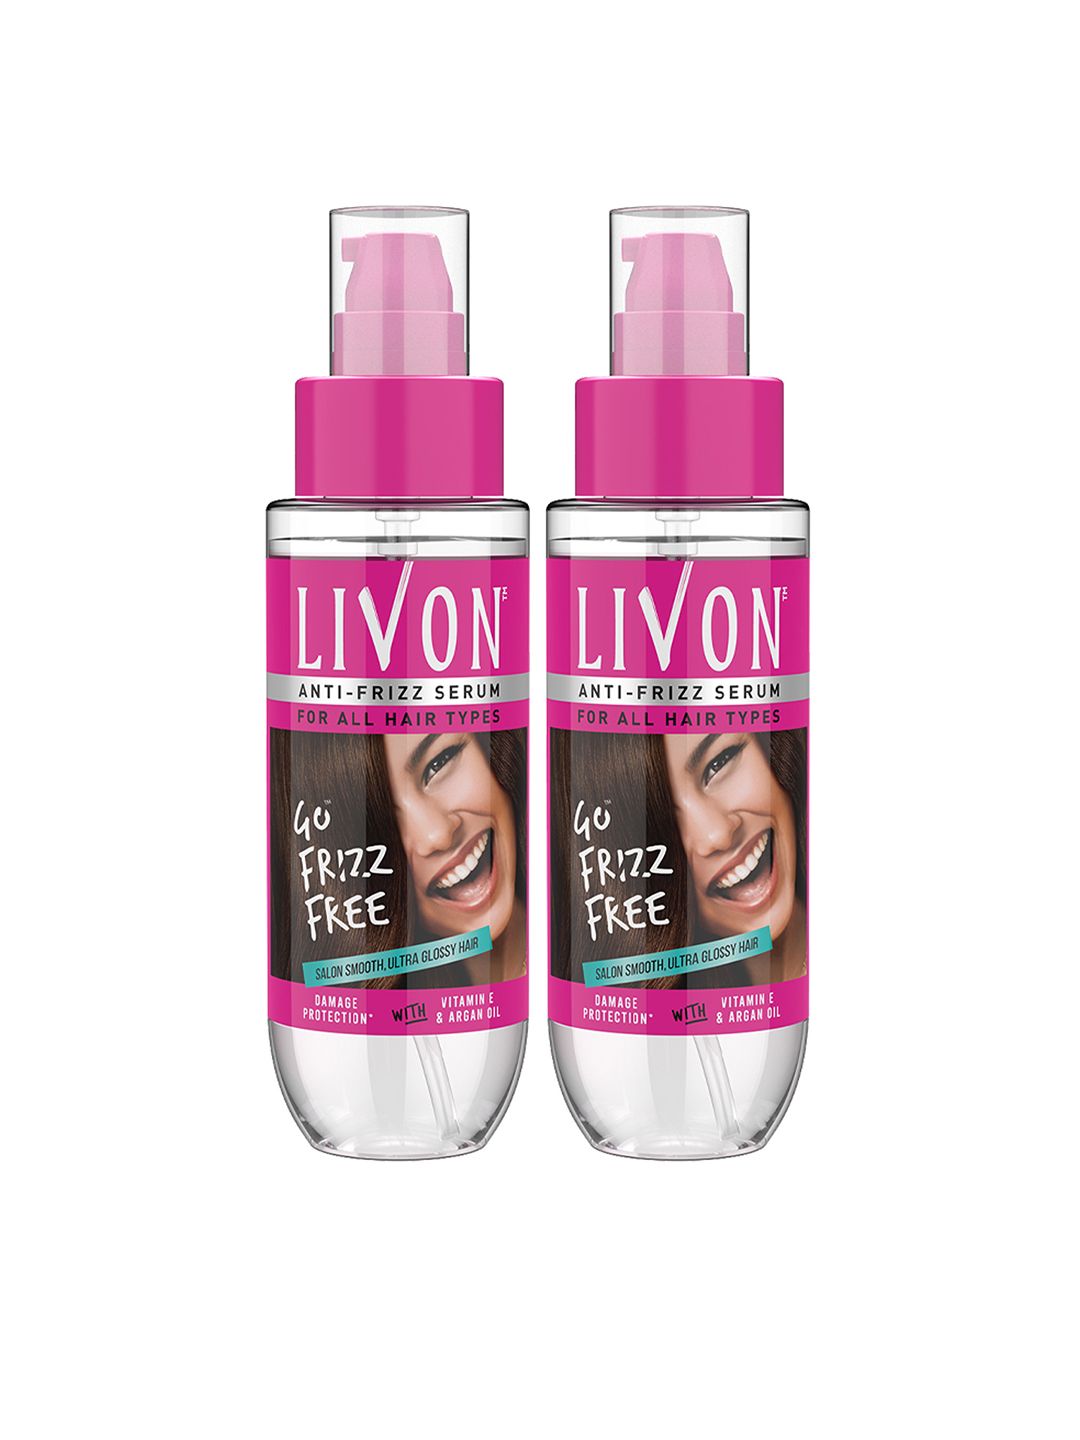 Livon Set of 2 Anti-Frizz Hair Serum with Vitamin E & Argan Oil - 100 ml each Price in India